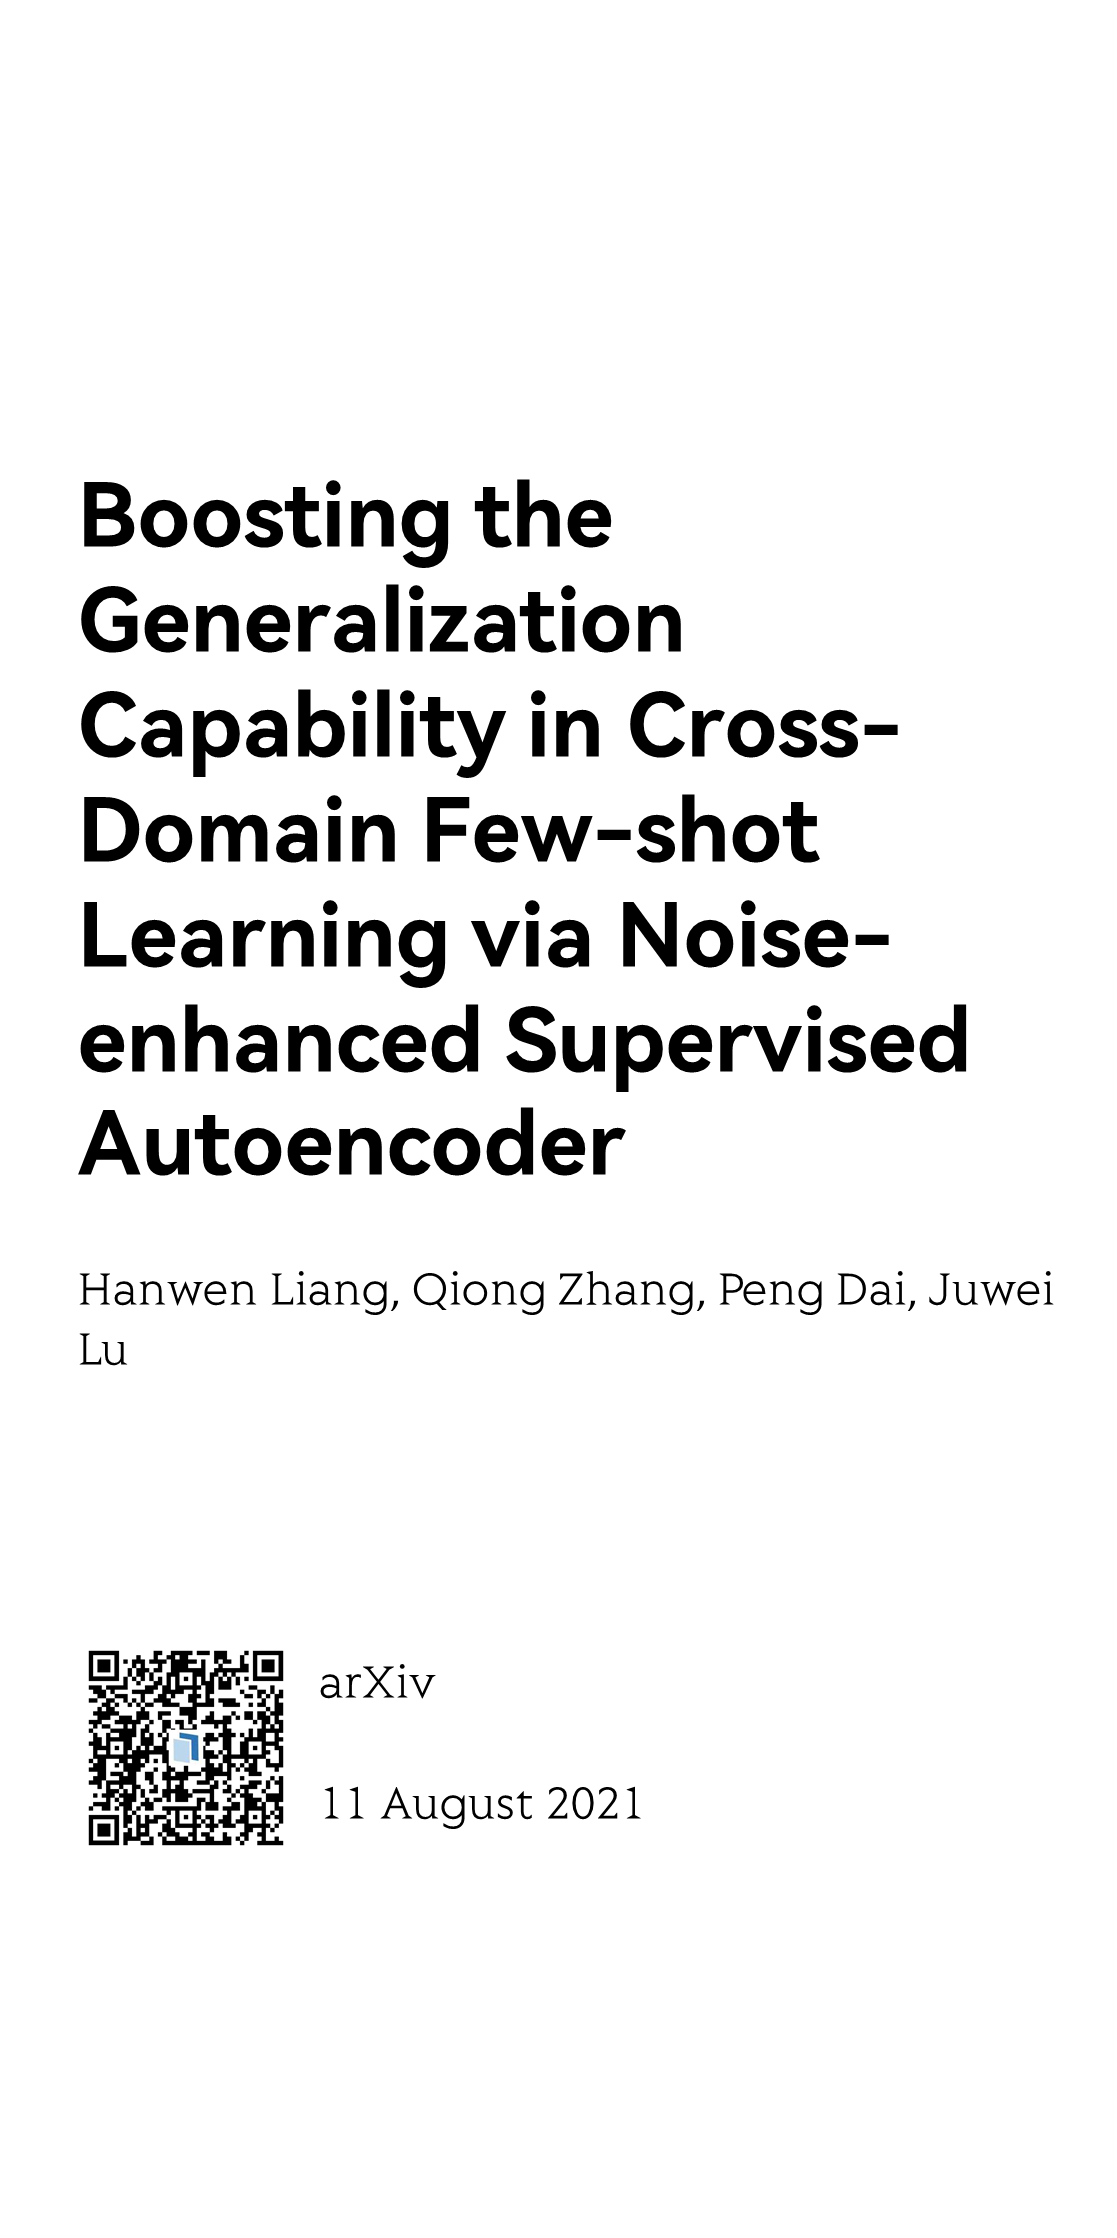 Boosting the Generalization Capability in Cross-Domain Few-shot Learning via Noise-enhanced Supervised Autoencoder_1